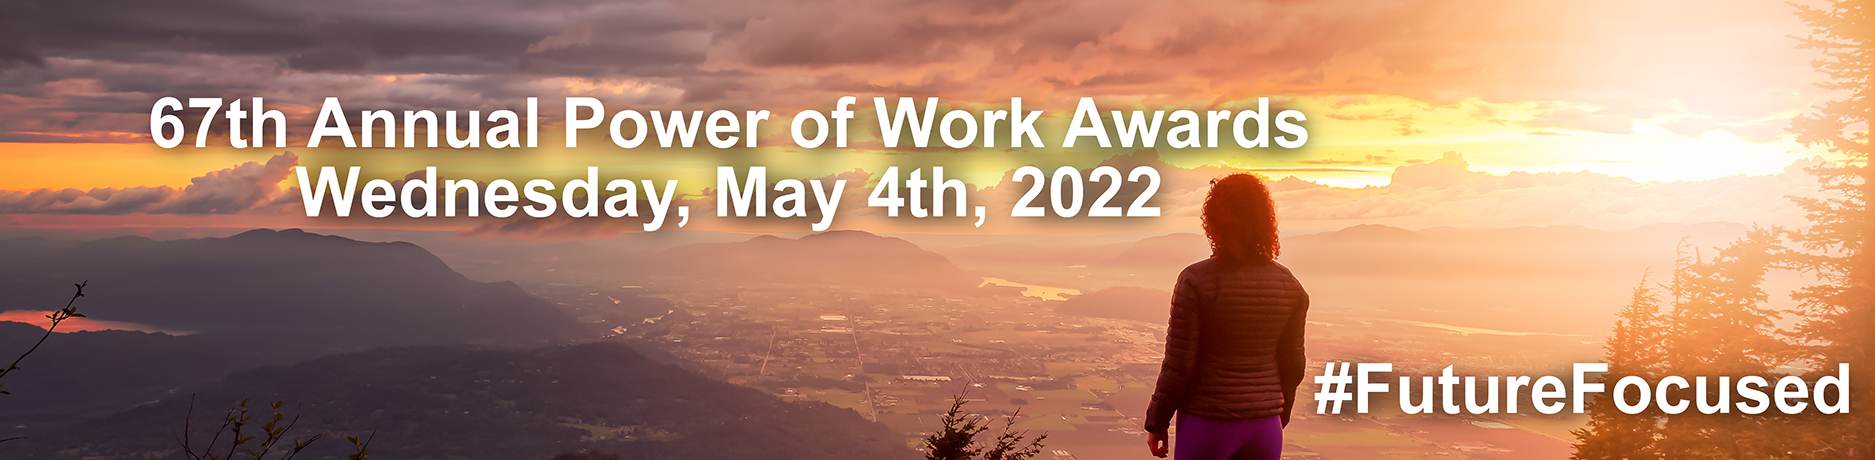 2022 Power of Work Awards